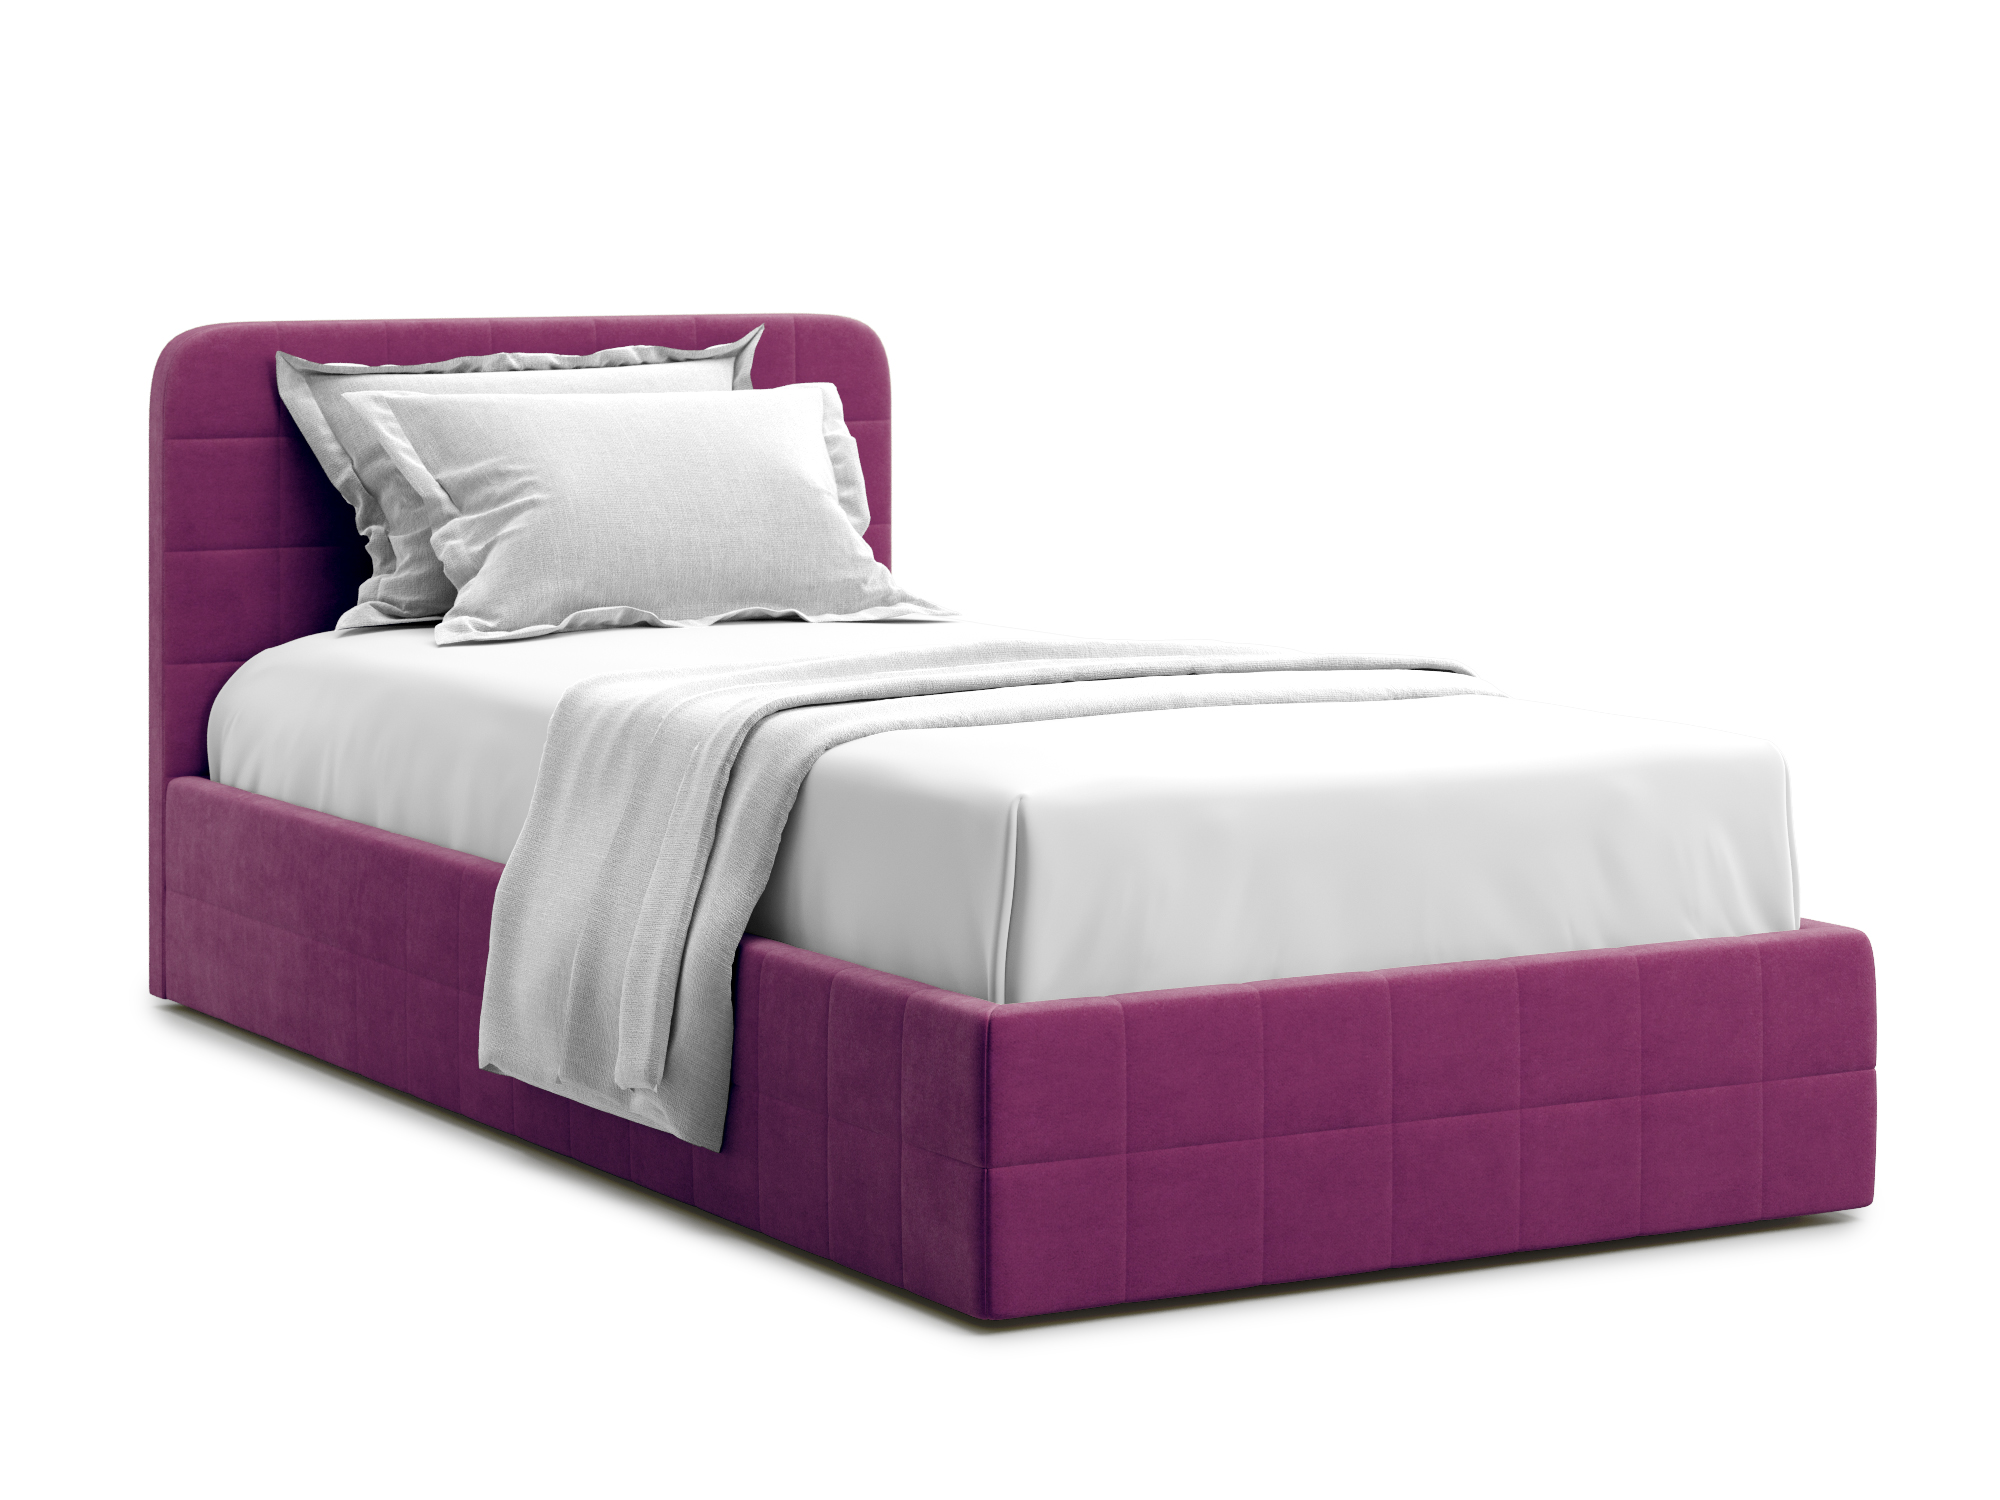 Кровать Adda 120 Velutto 15 Фиолетовый, Массив, ДСП кровать adda 120 velutto 27 оранжевый массив дсп